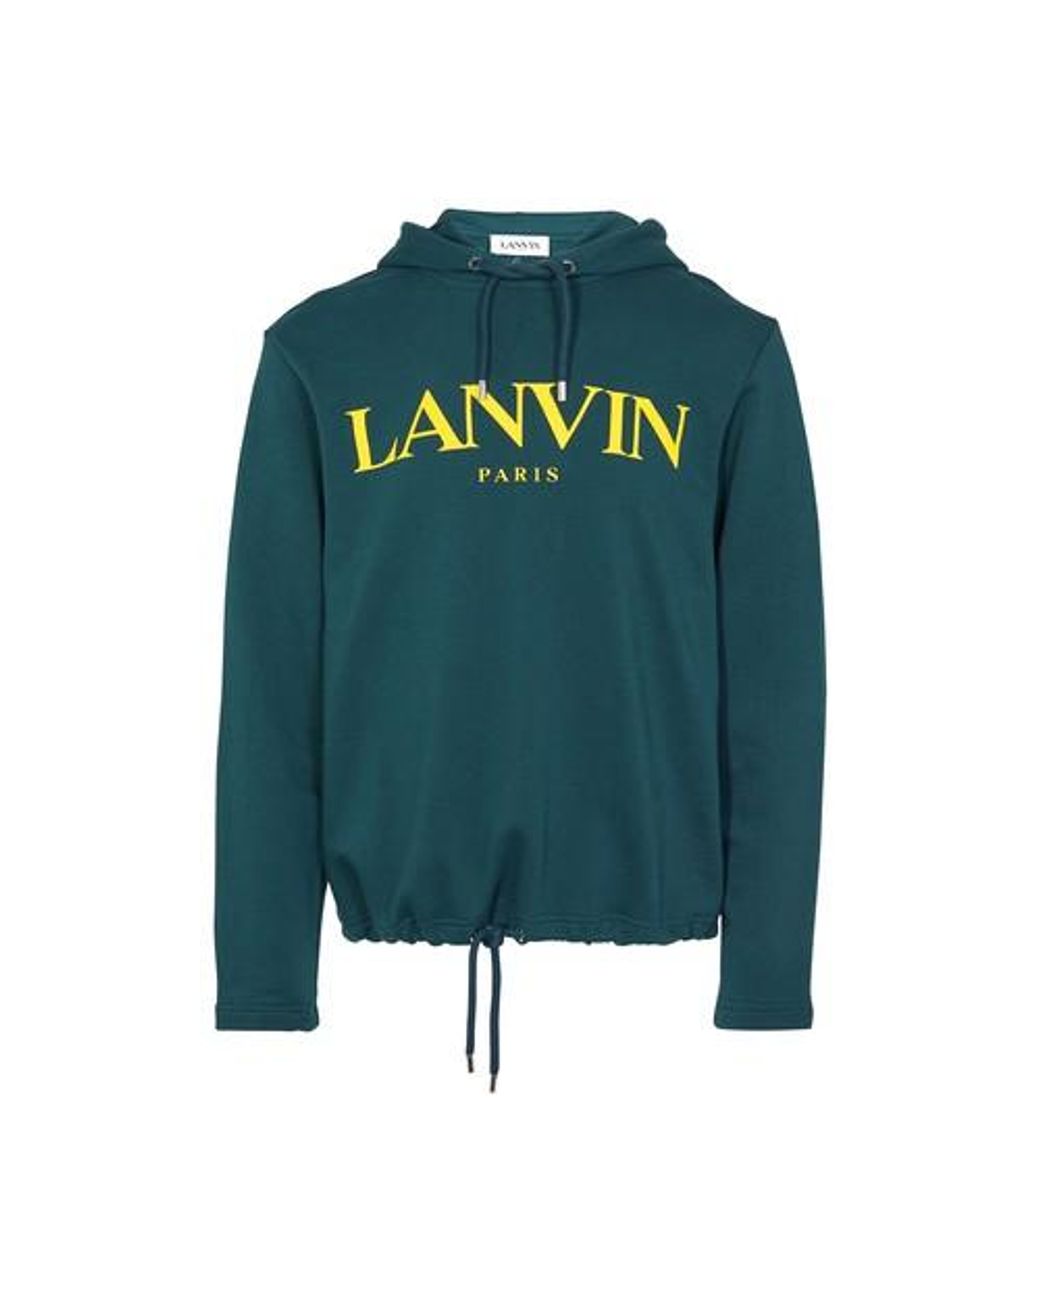 Lanvin Logo Hoodie in Dark Green (Green) for Men - Lyst